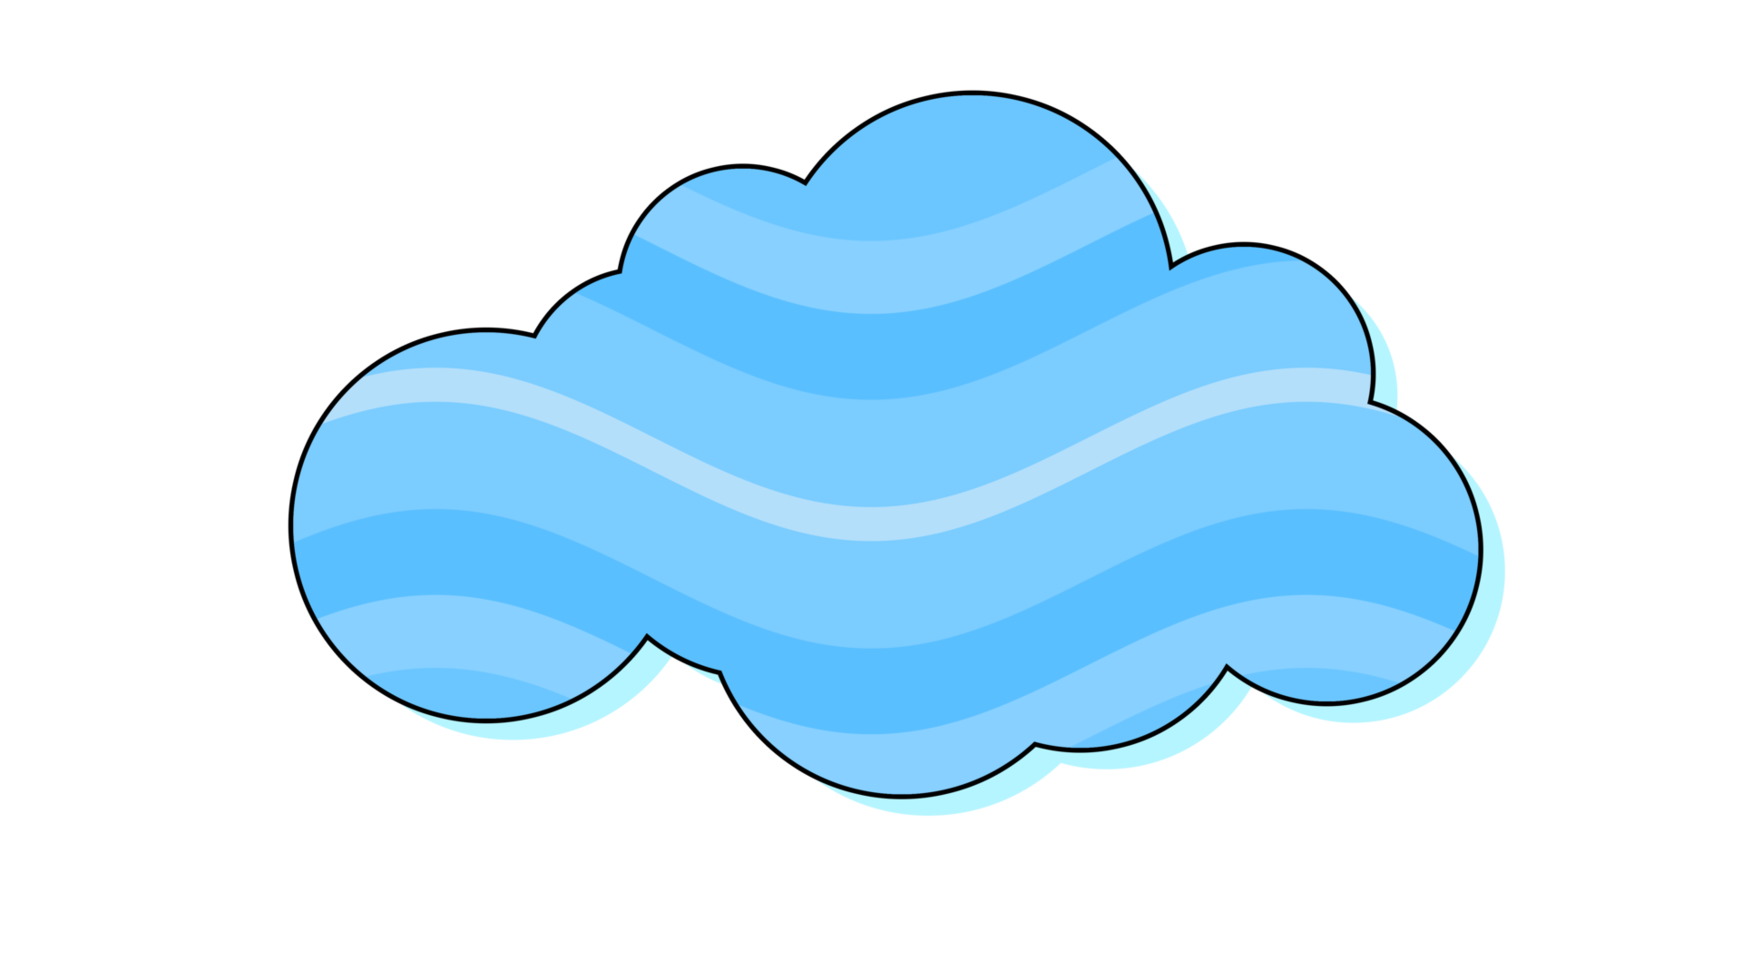 Free fondo abstracto de dibujos animados de nubes kawaii. 12914410 PNG with  Transparent Background